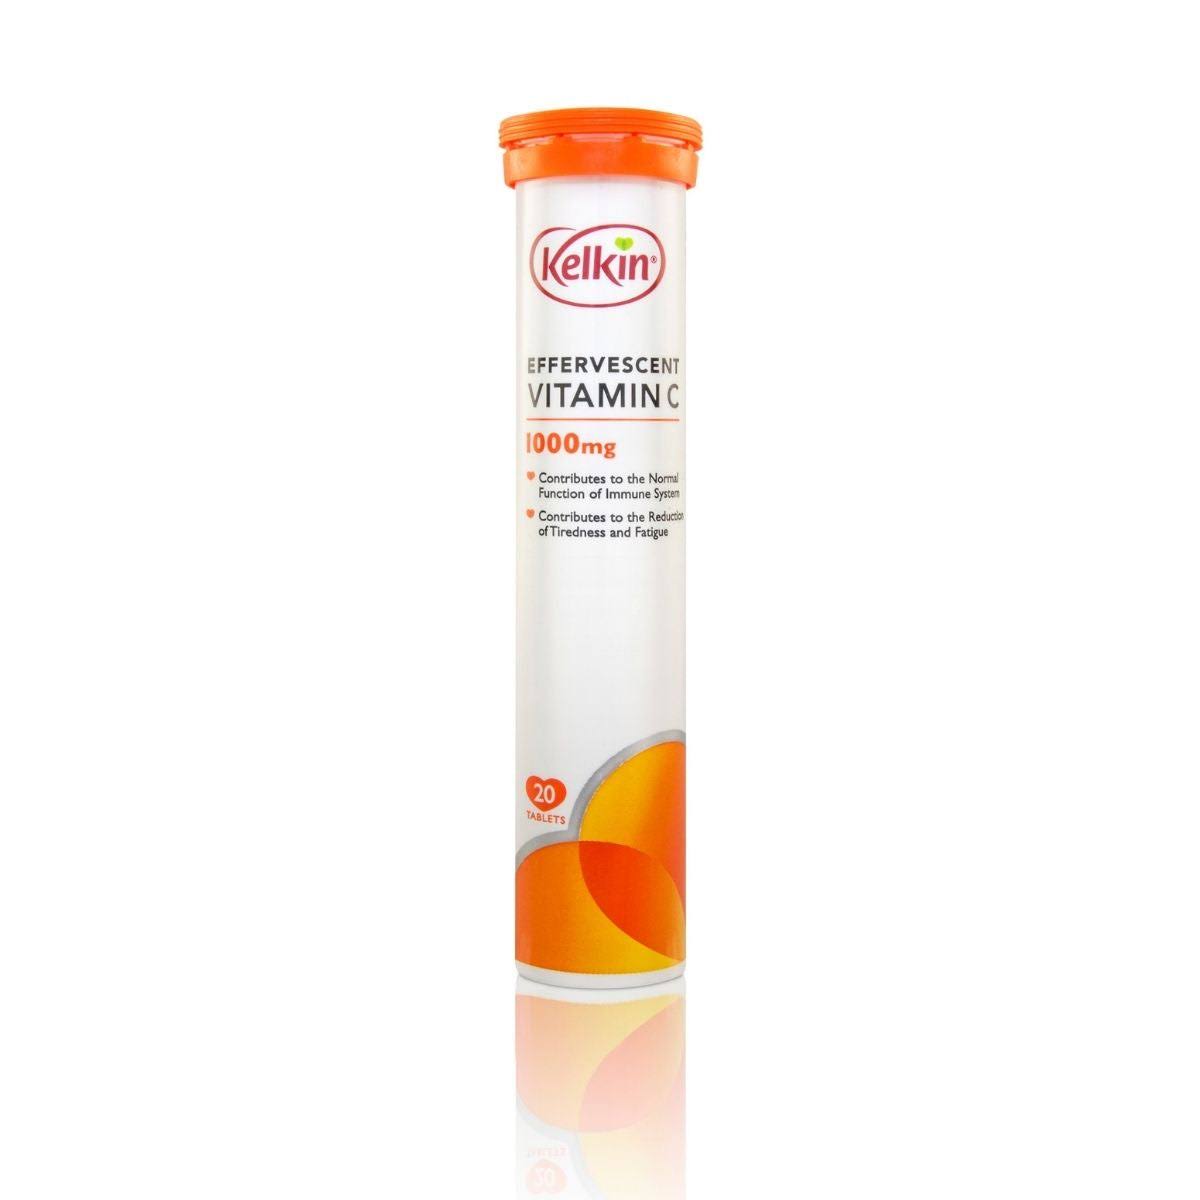 Kelkin Vitamin C Effervescent Food Supplement - Orange Flavored, 20pk